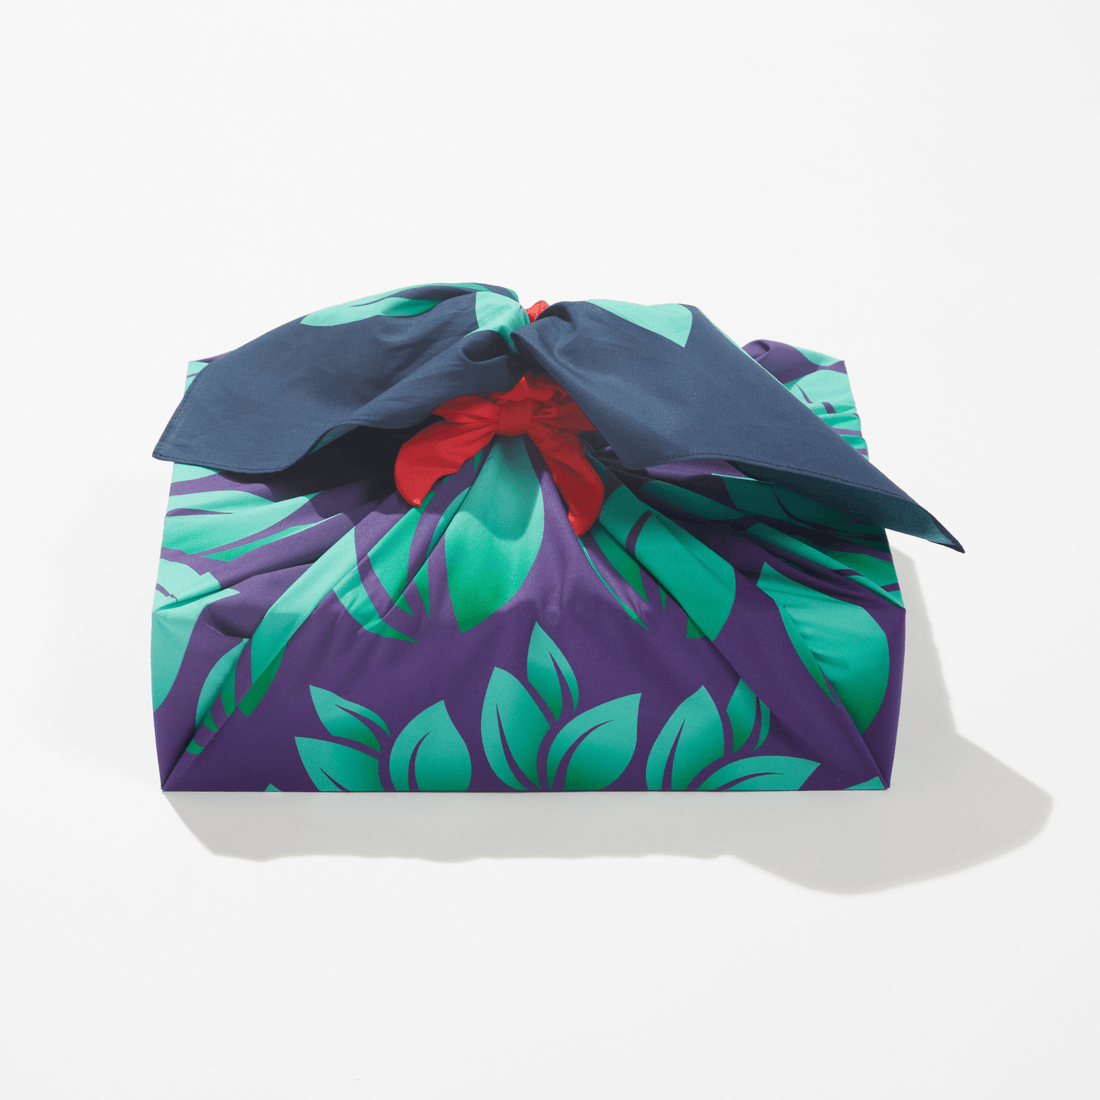 Gentle Heart | 35" Furoshiki Gift Wrap by Rawbie Thring - Wrappr